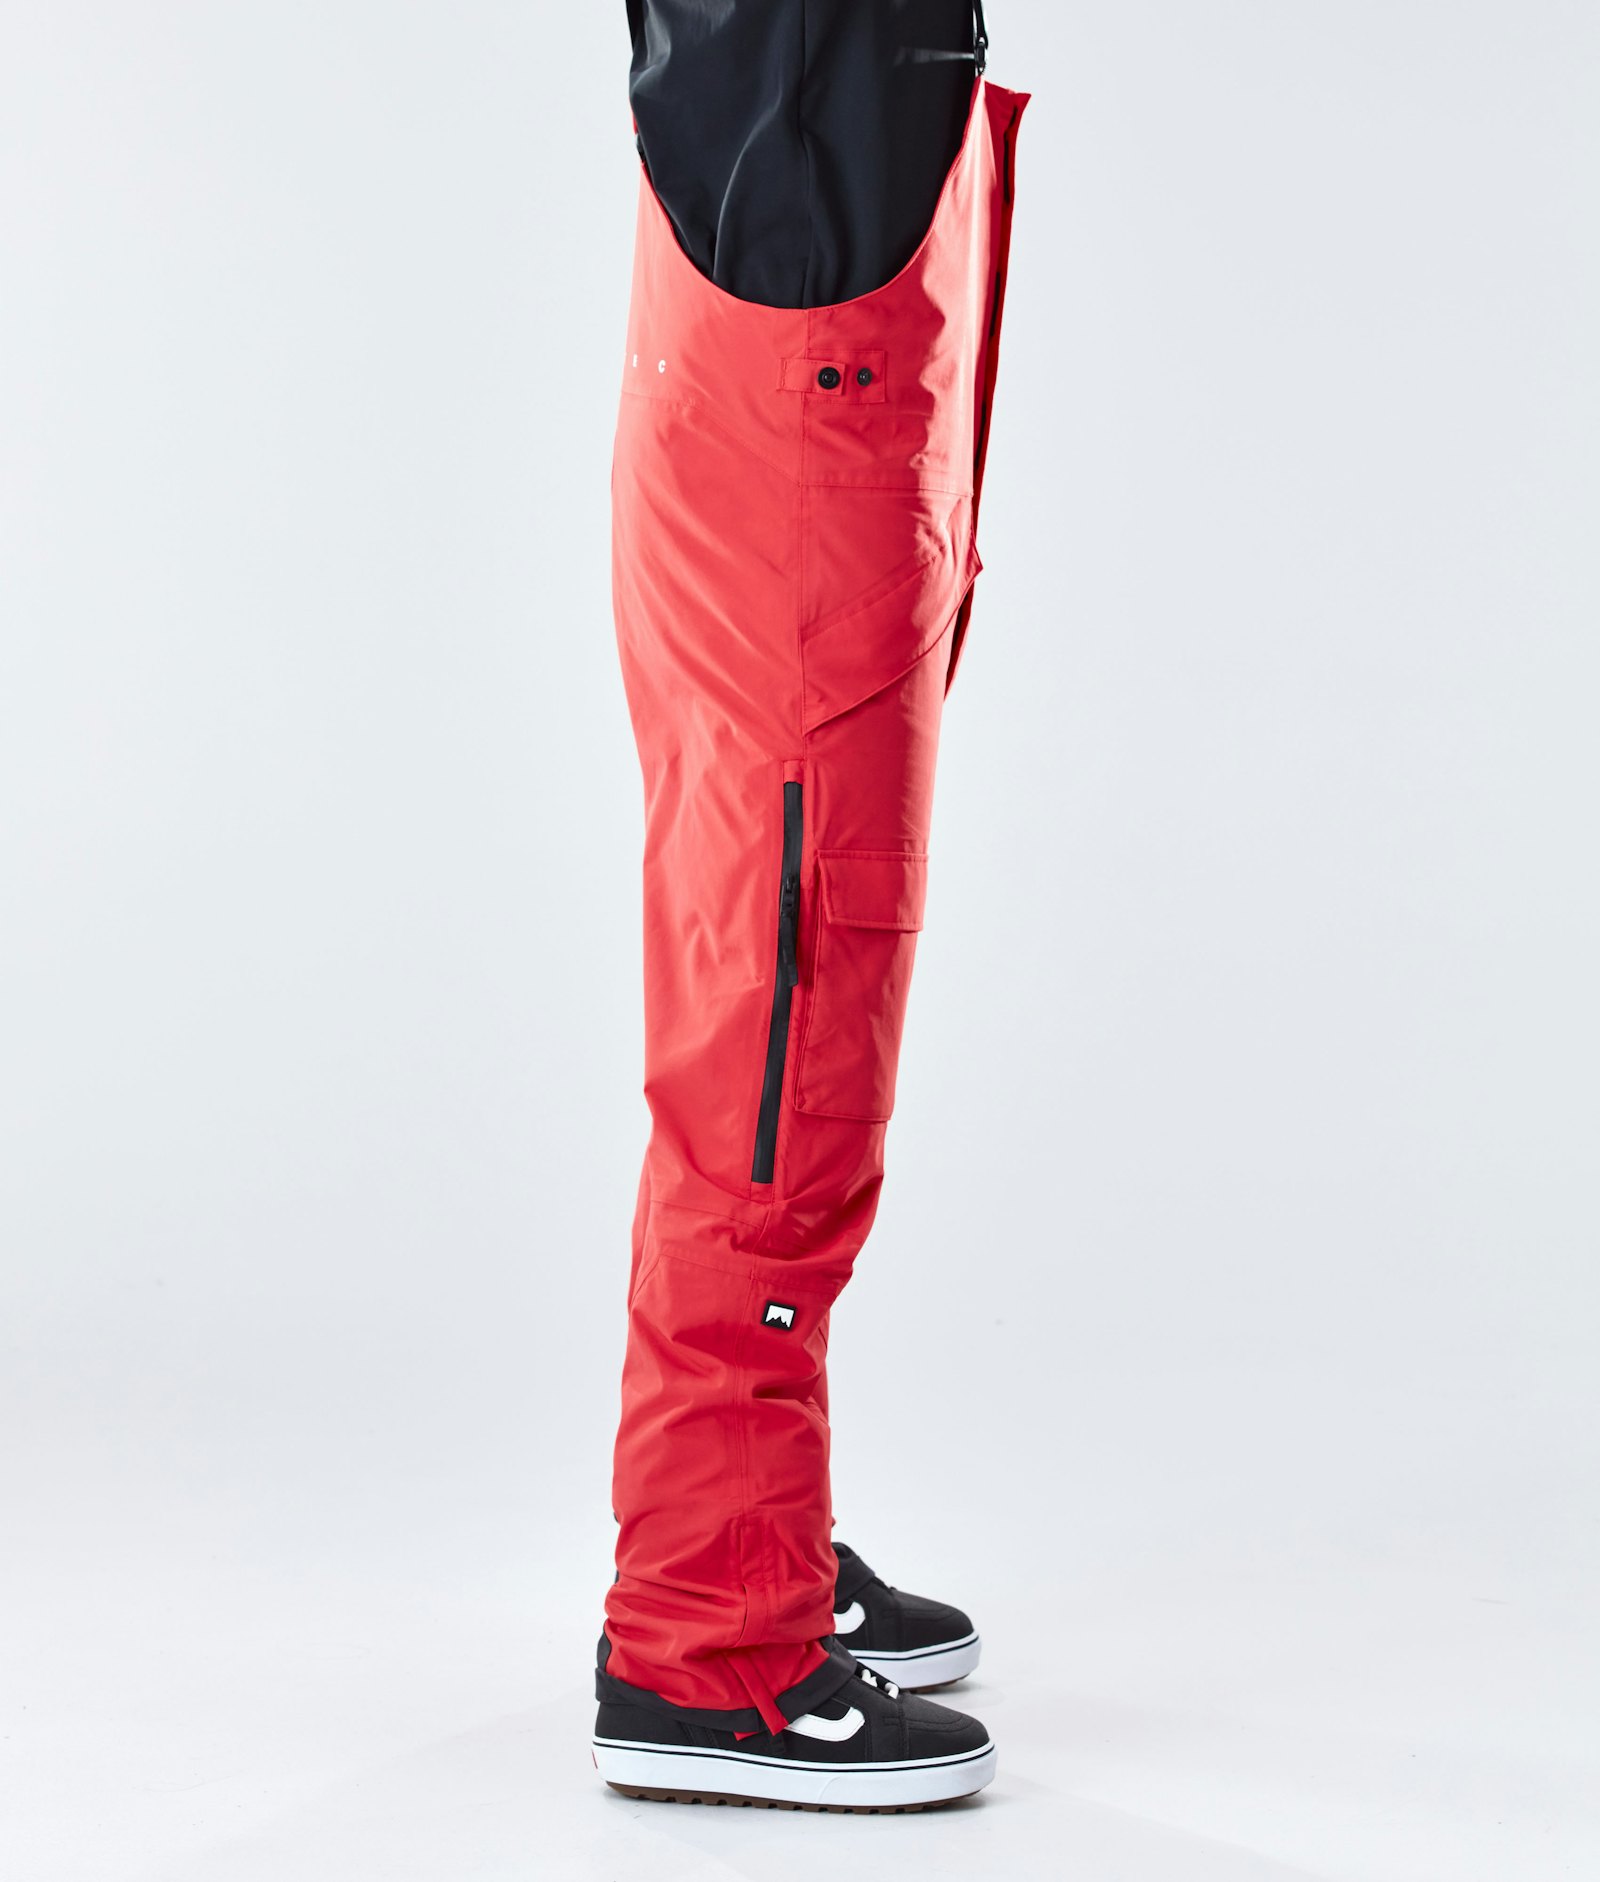 Montec Fawk 2020 Snowboard Pants Men Red